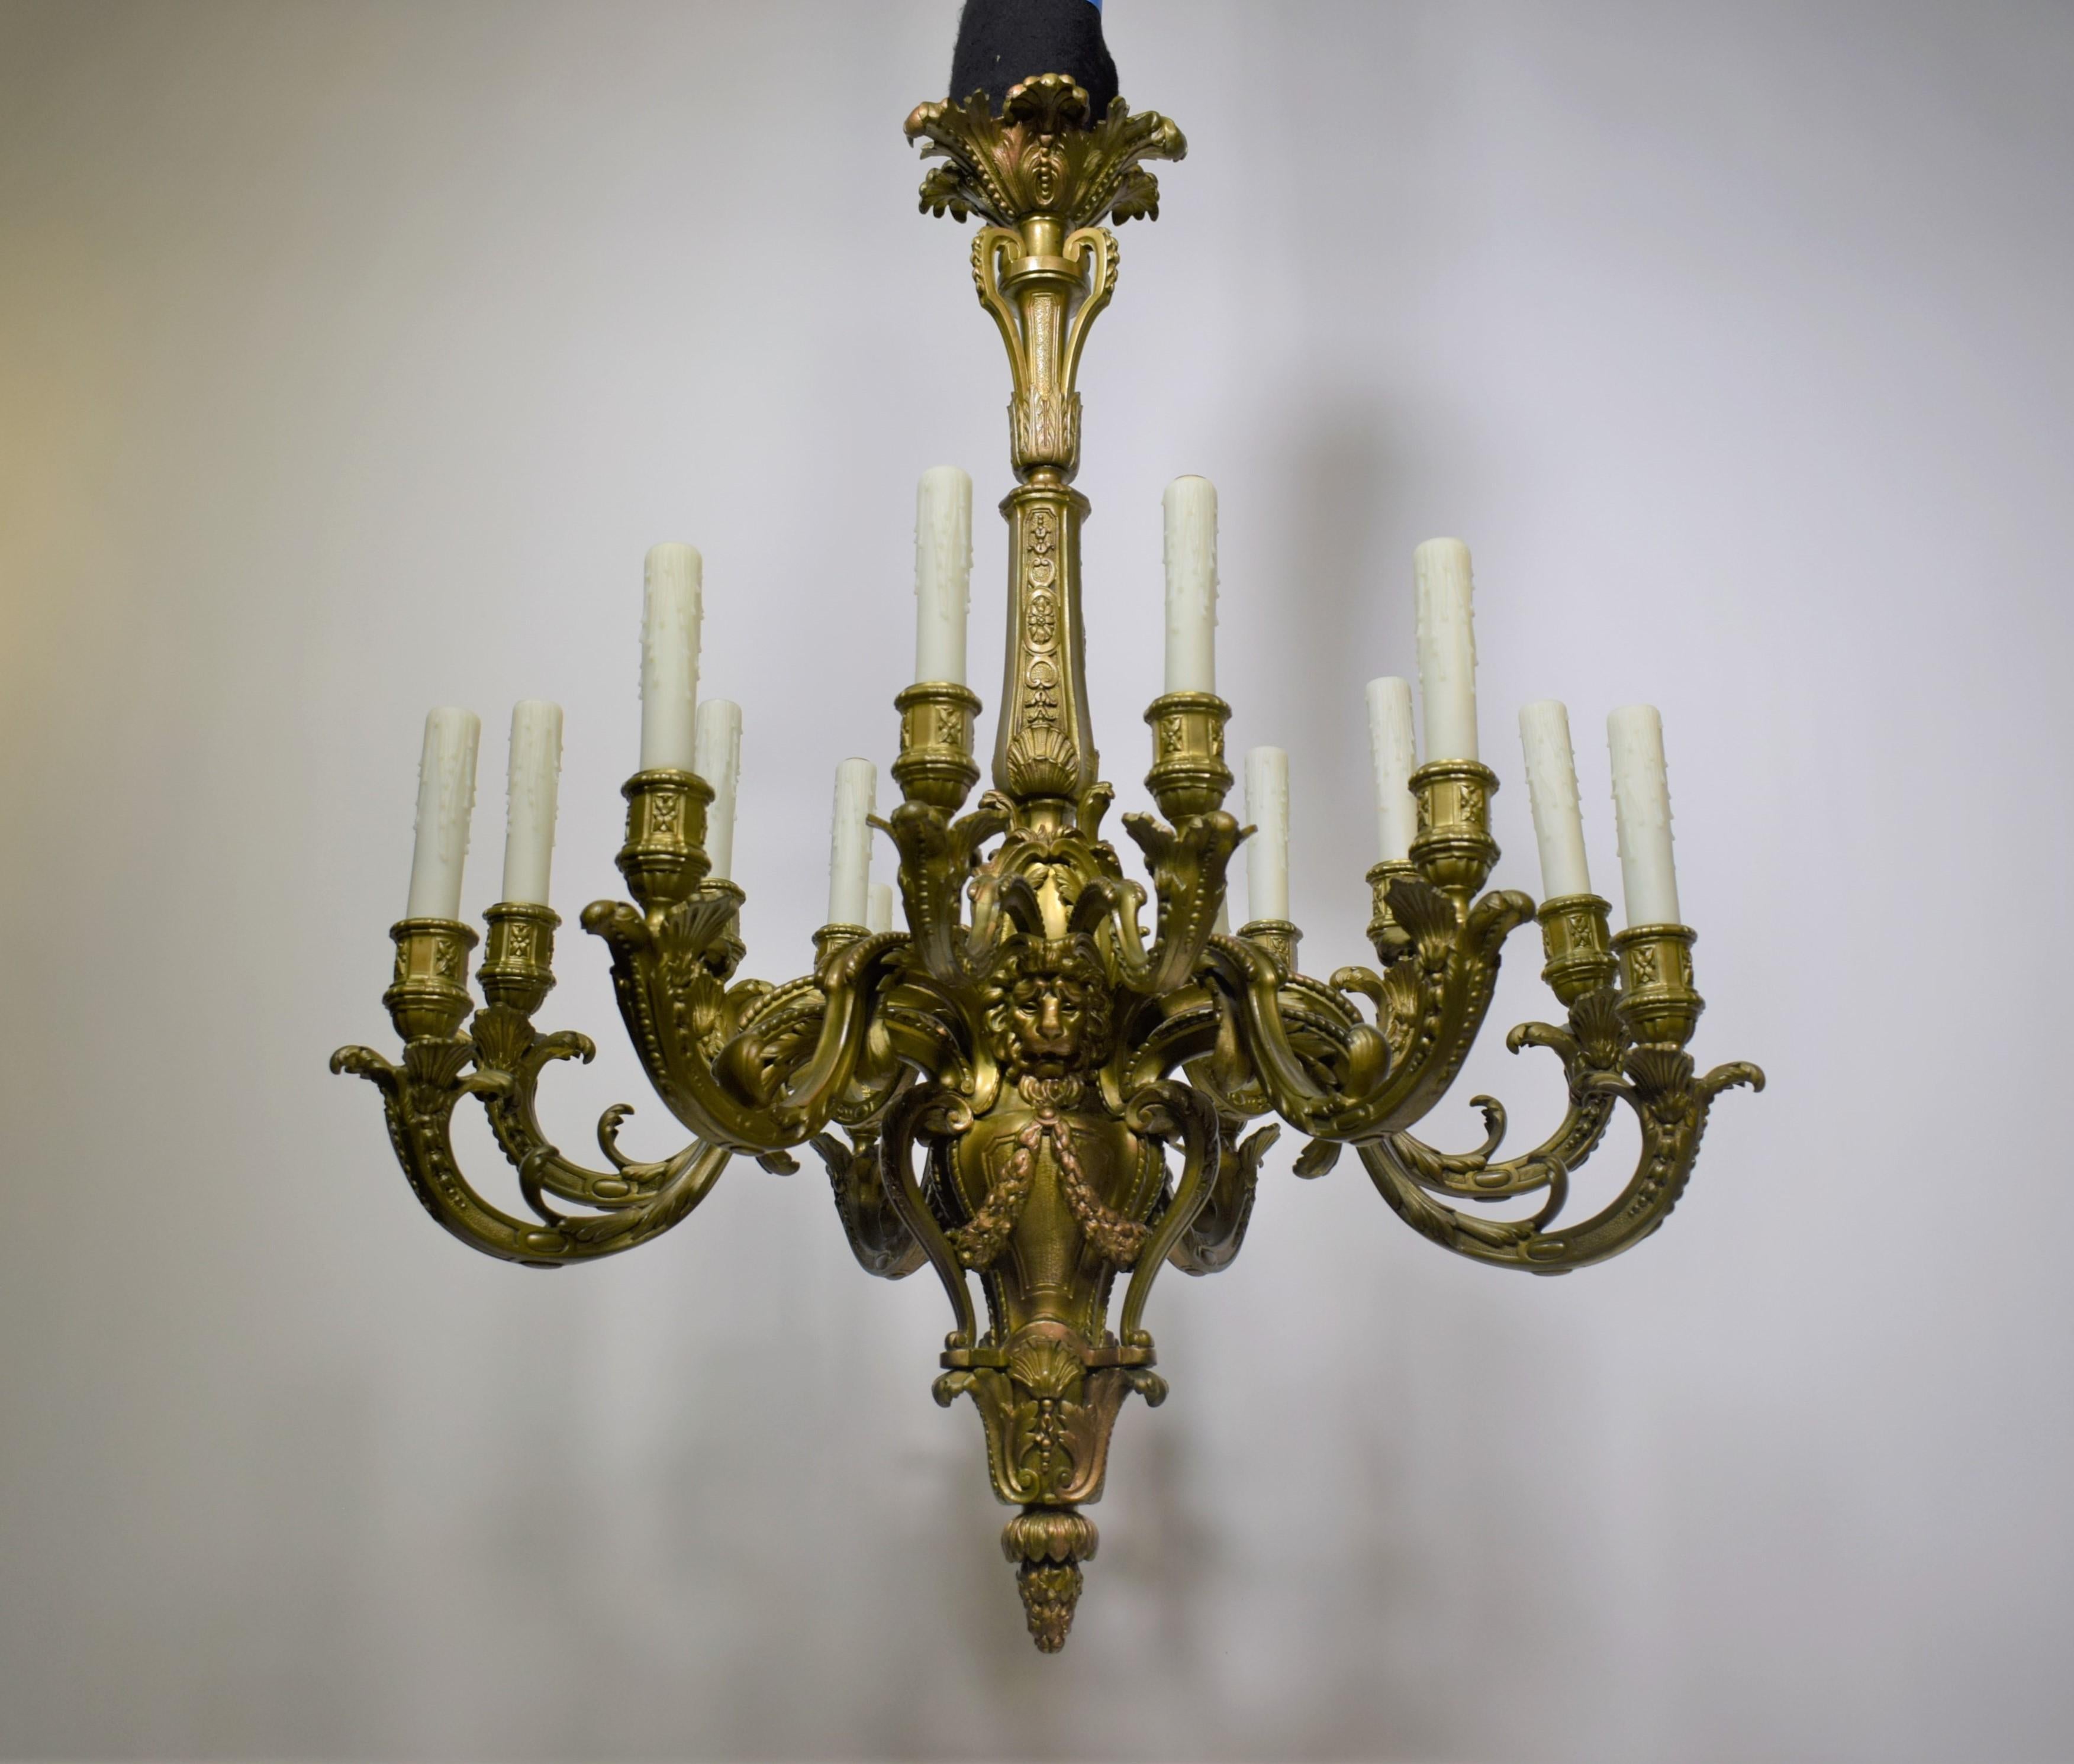 Regency stylegilt bronze chandelier featuring Lion's Masks. France, circa 1900.
16 lights
Dimensions: height 39